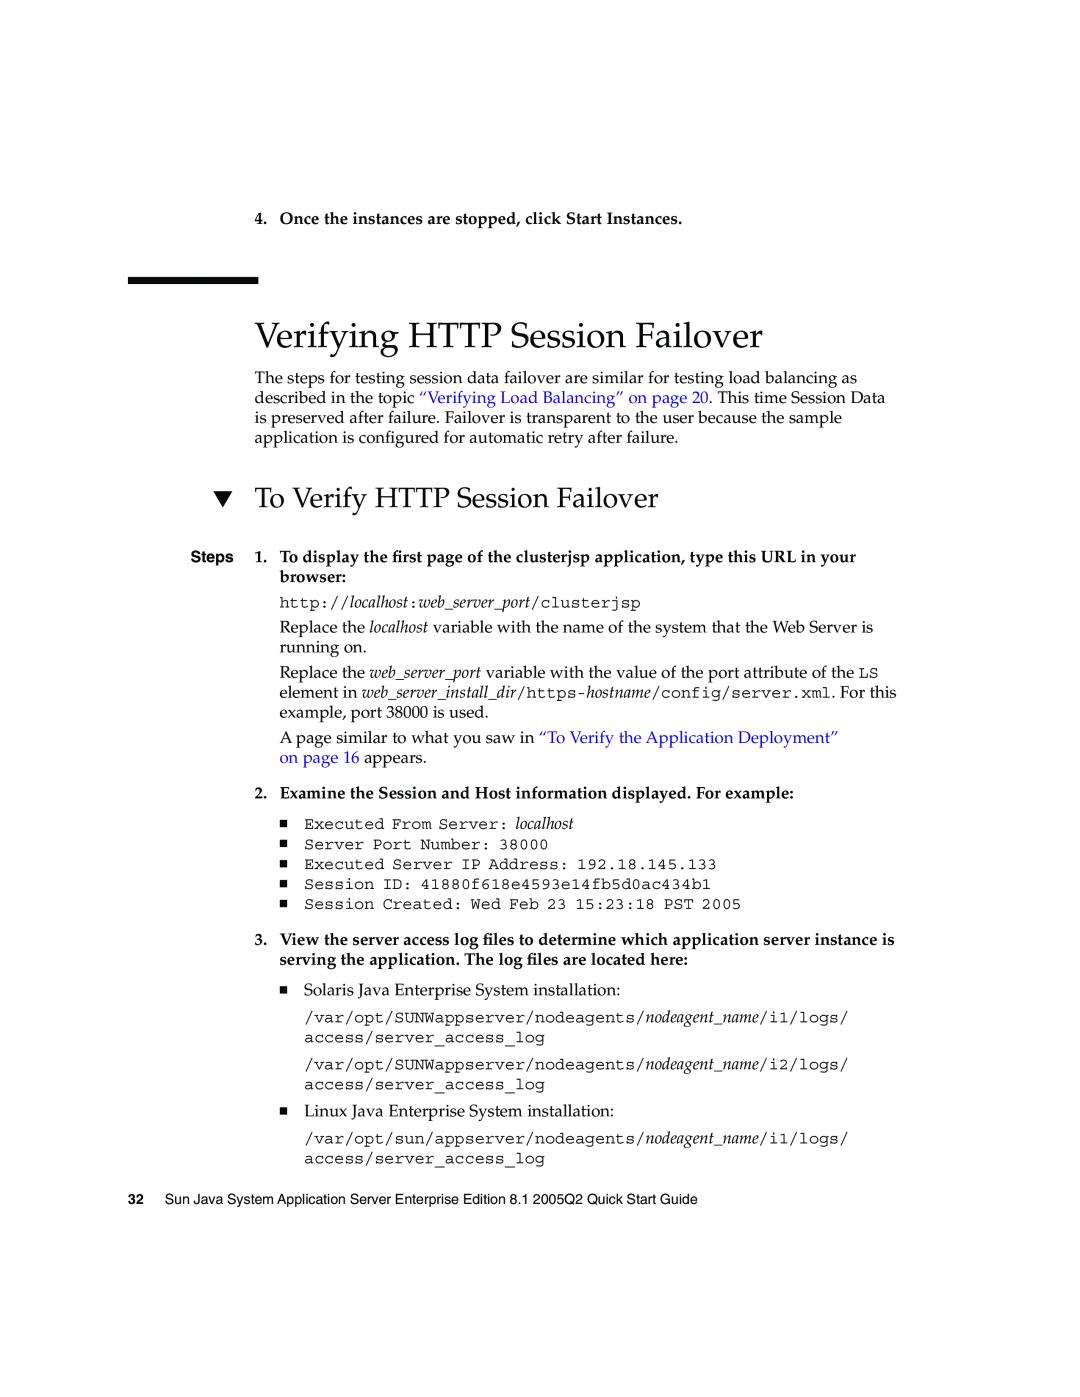 Sun Microsystems 2005Q2 quick start Verifying HTTP Session Failover, To Verify HTTP Session Failover 